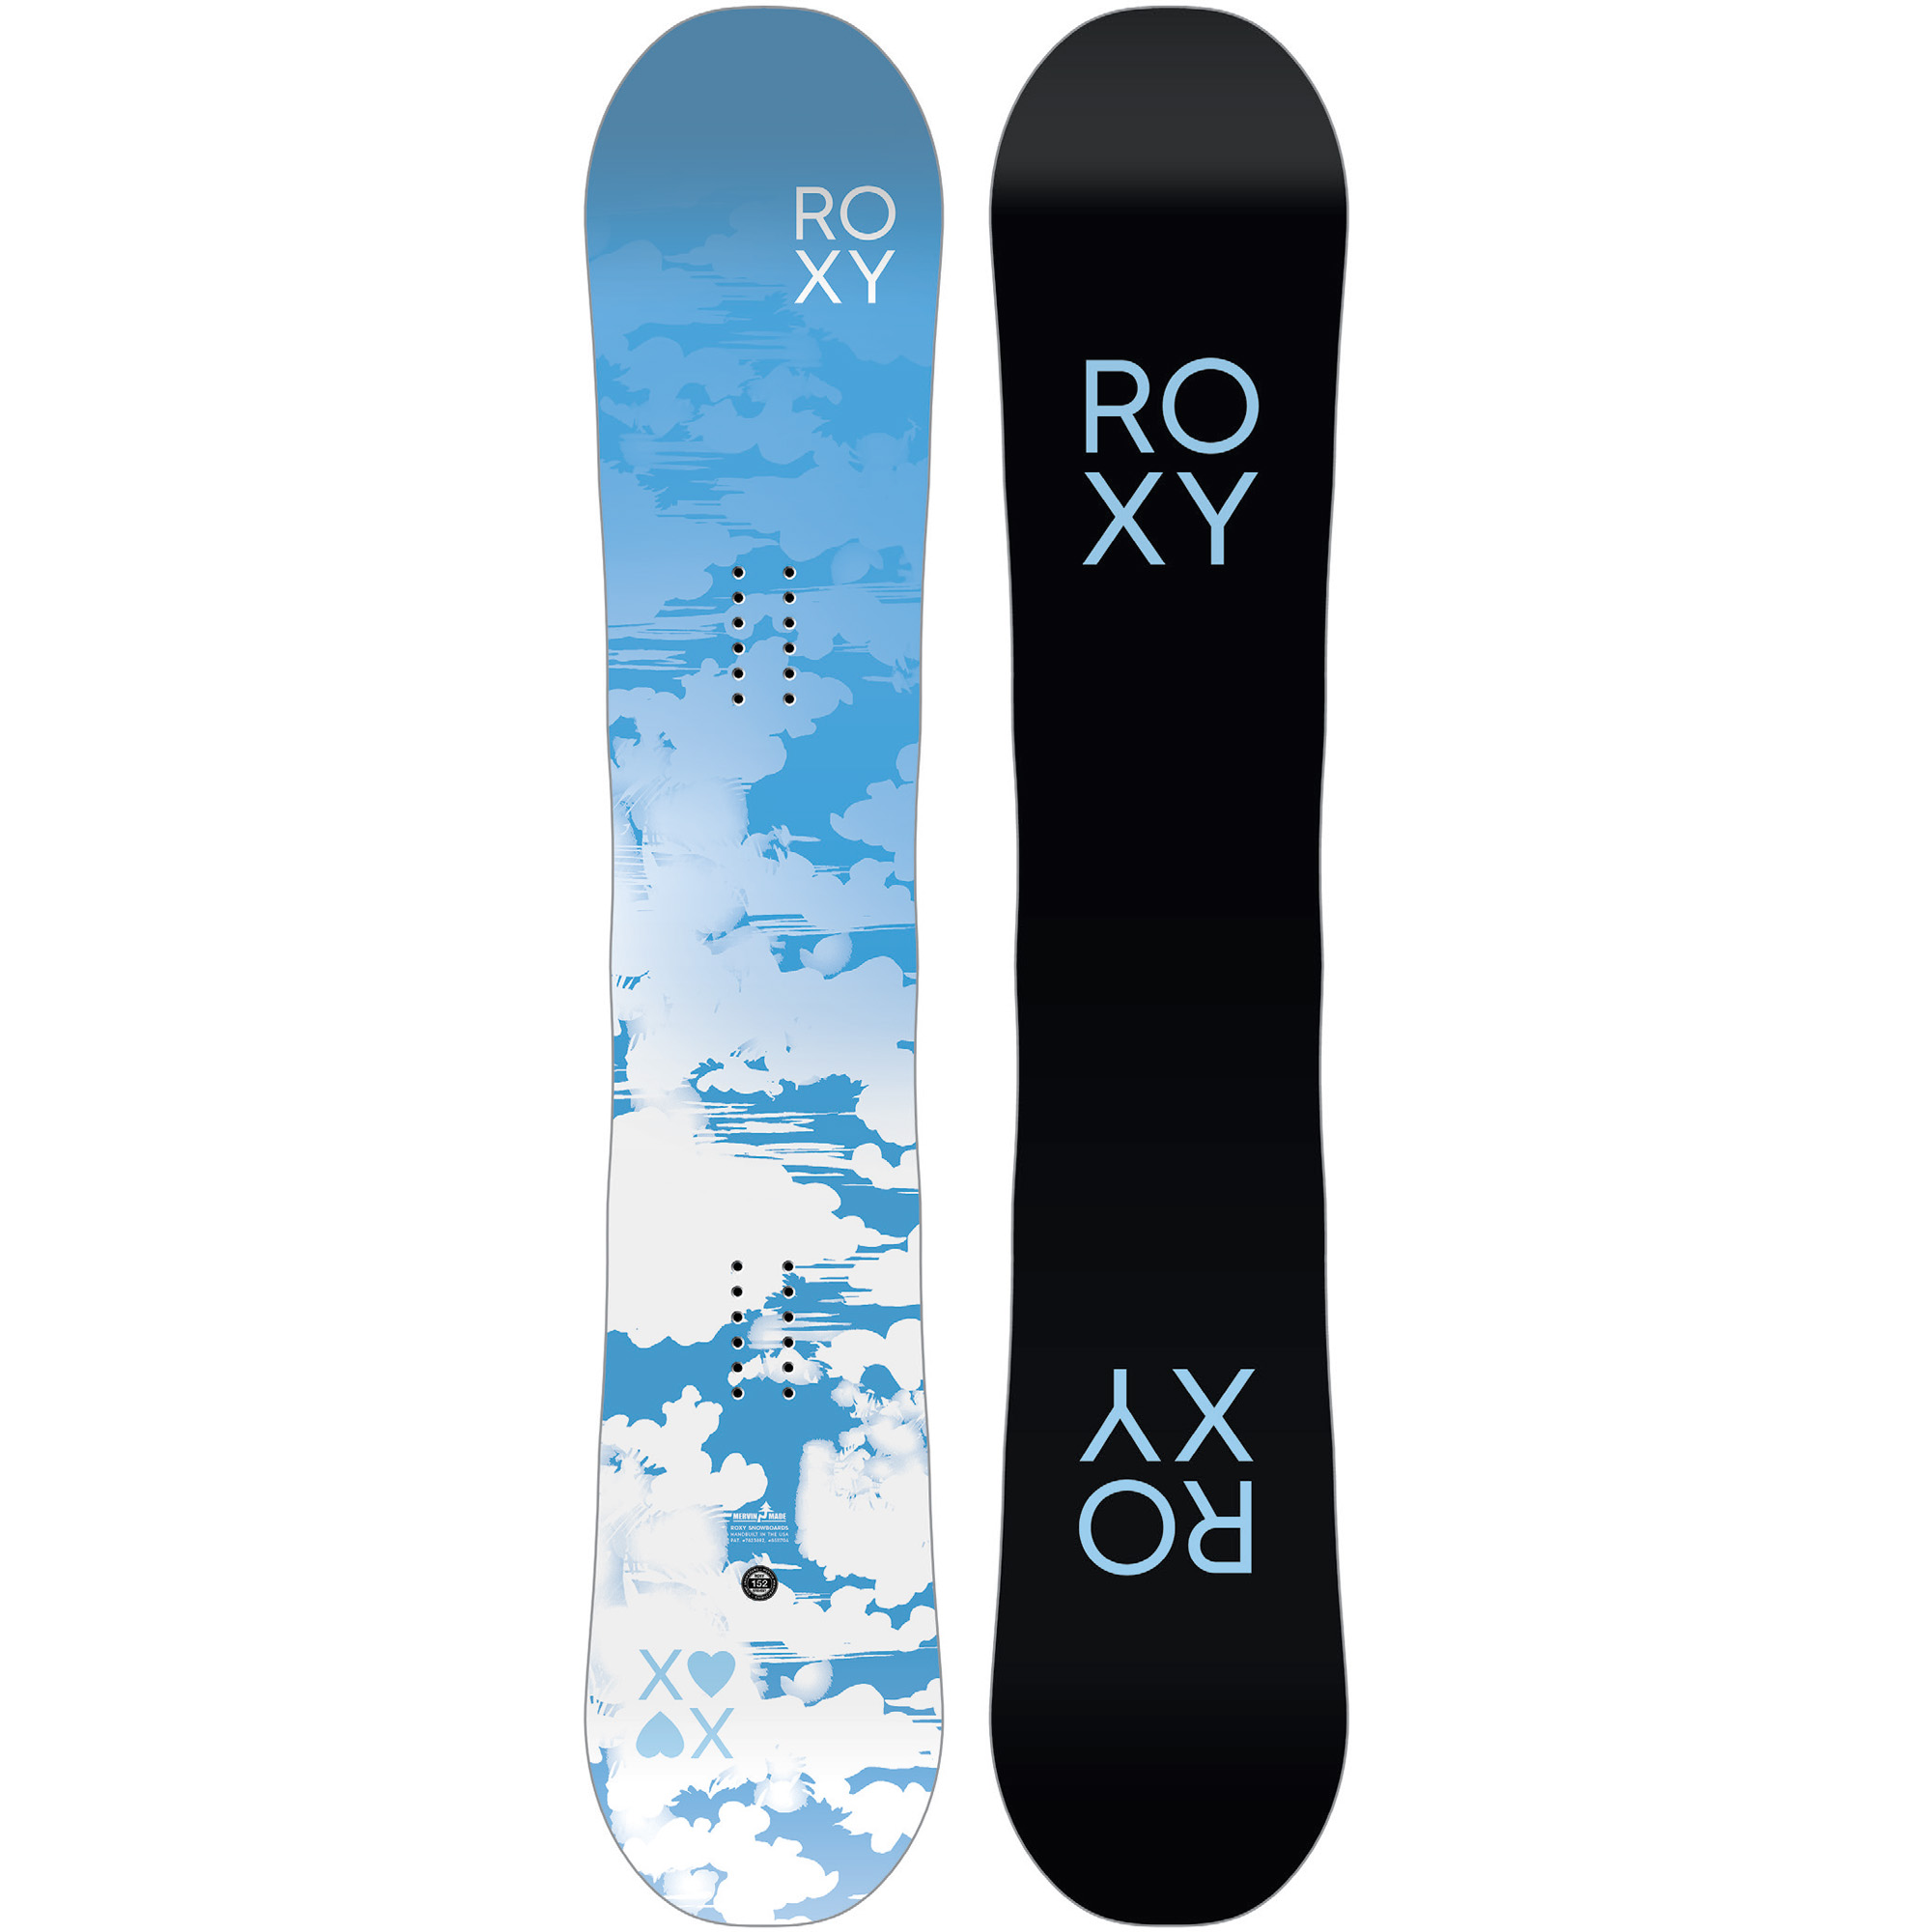 Roxy XOXO Pro Women's All Mountain Snowboard